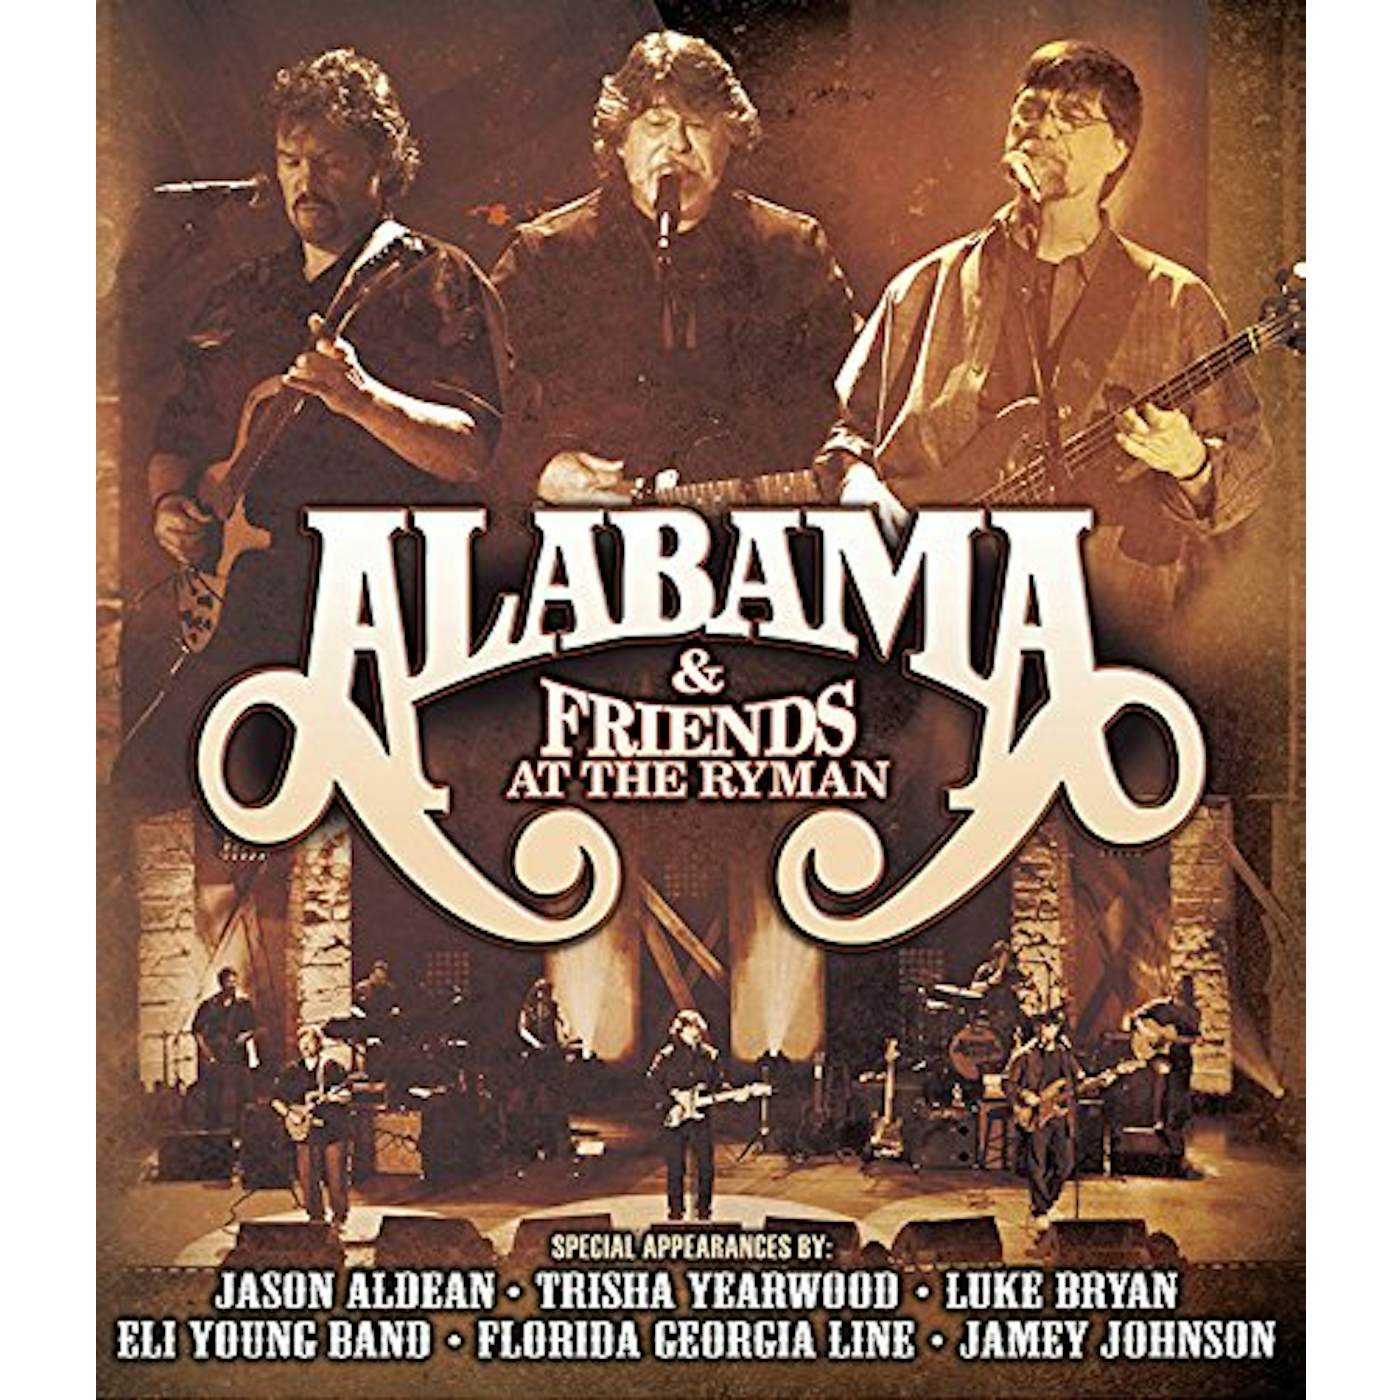 Alabama & friends AT THE RYMAN CD